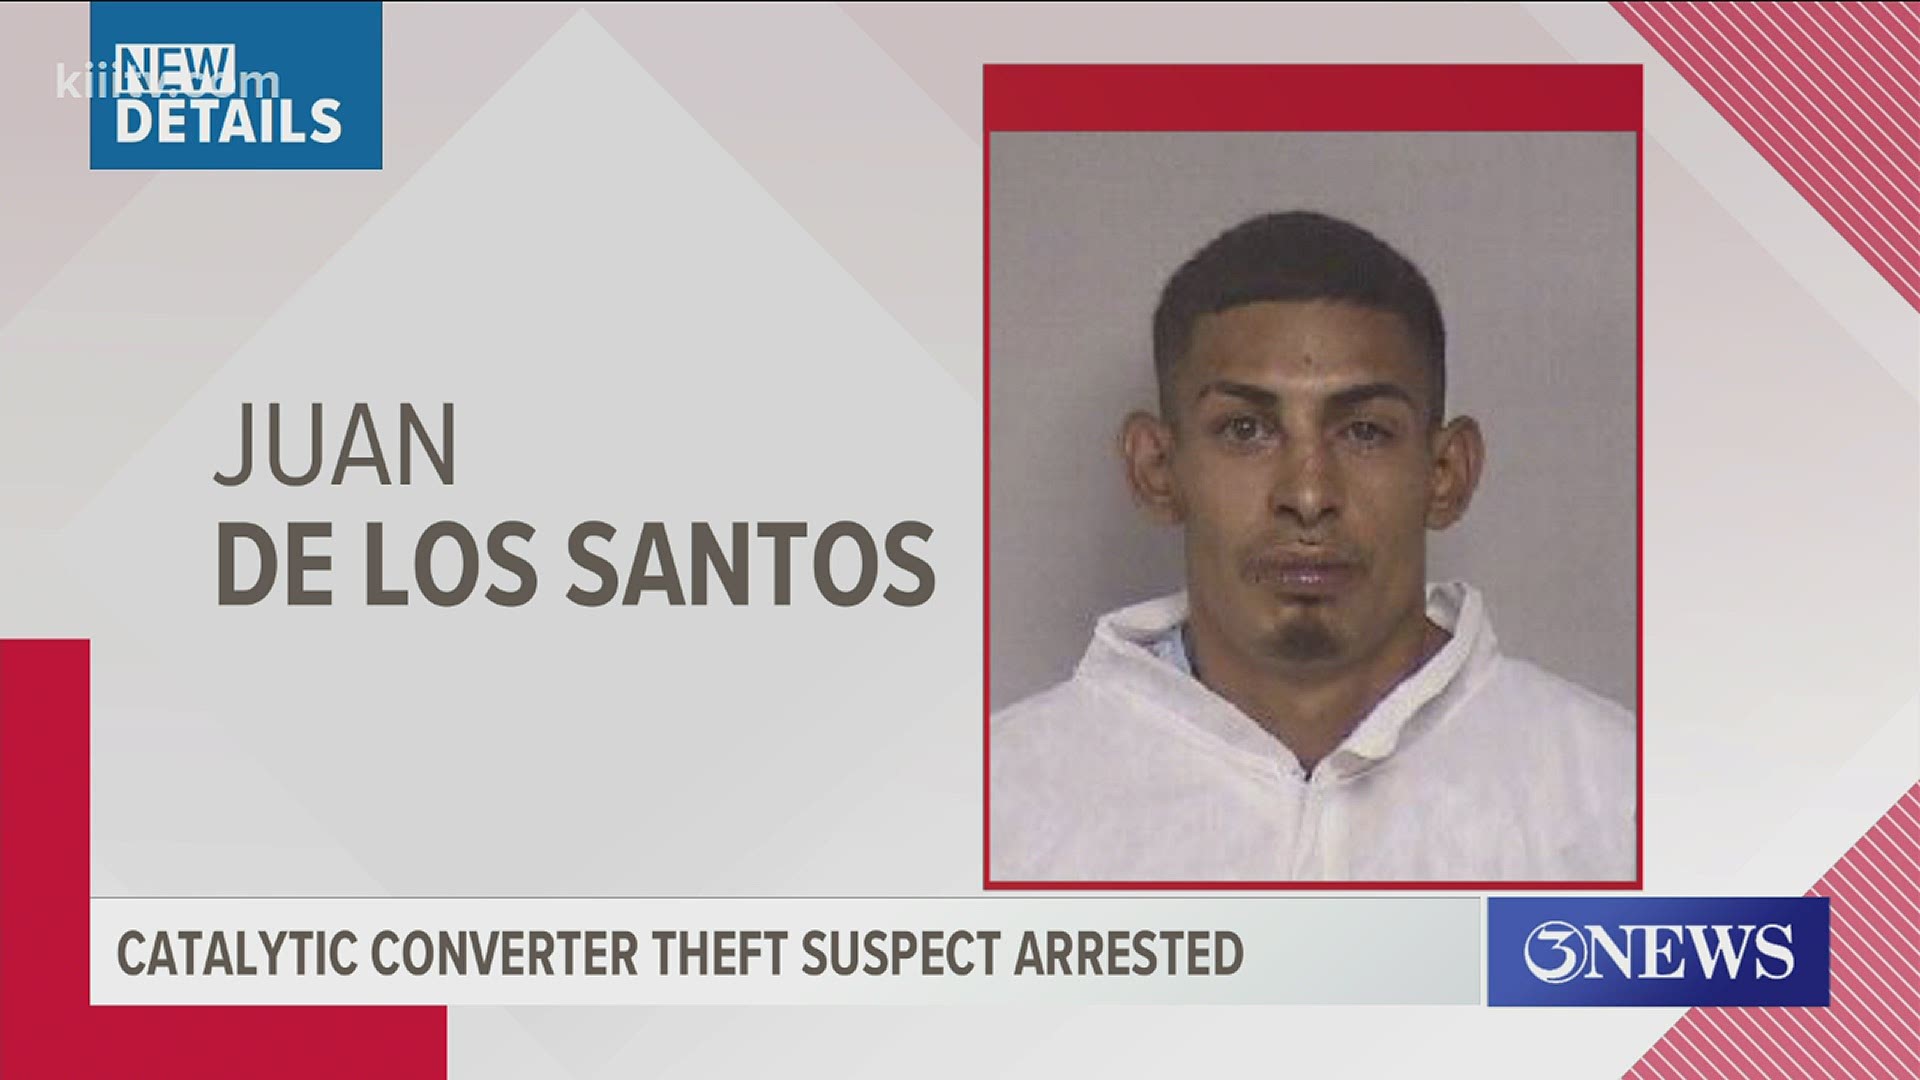 Police say 25-year-old Juan De Los Santos was attempting to steal a catalytic converter.